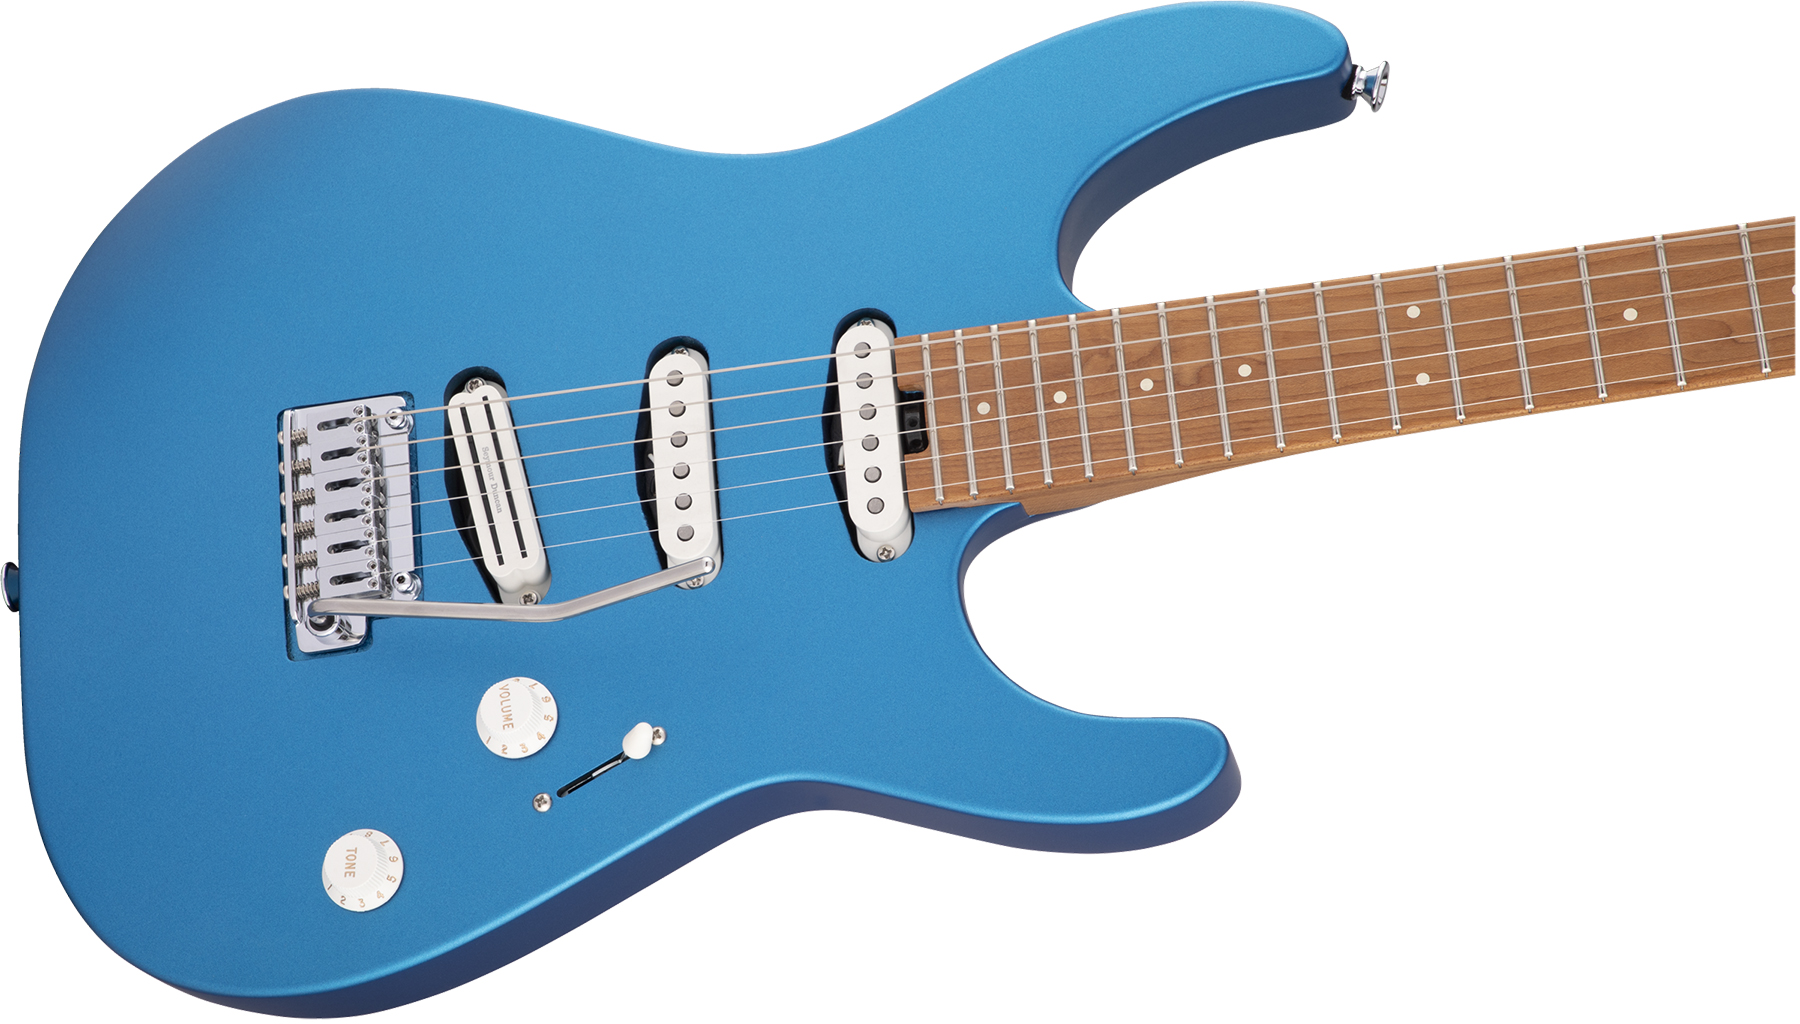 Charvel Dinky Dk22 Sss 2pt Cm Pro-mod 3s Seymour Duncan Mn - Electric Blue - Guitarra electrica metalica - Variation 2